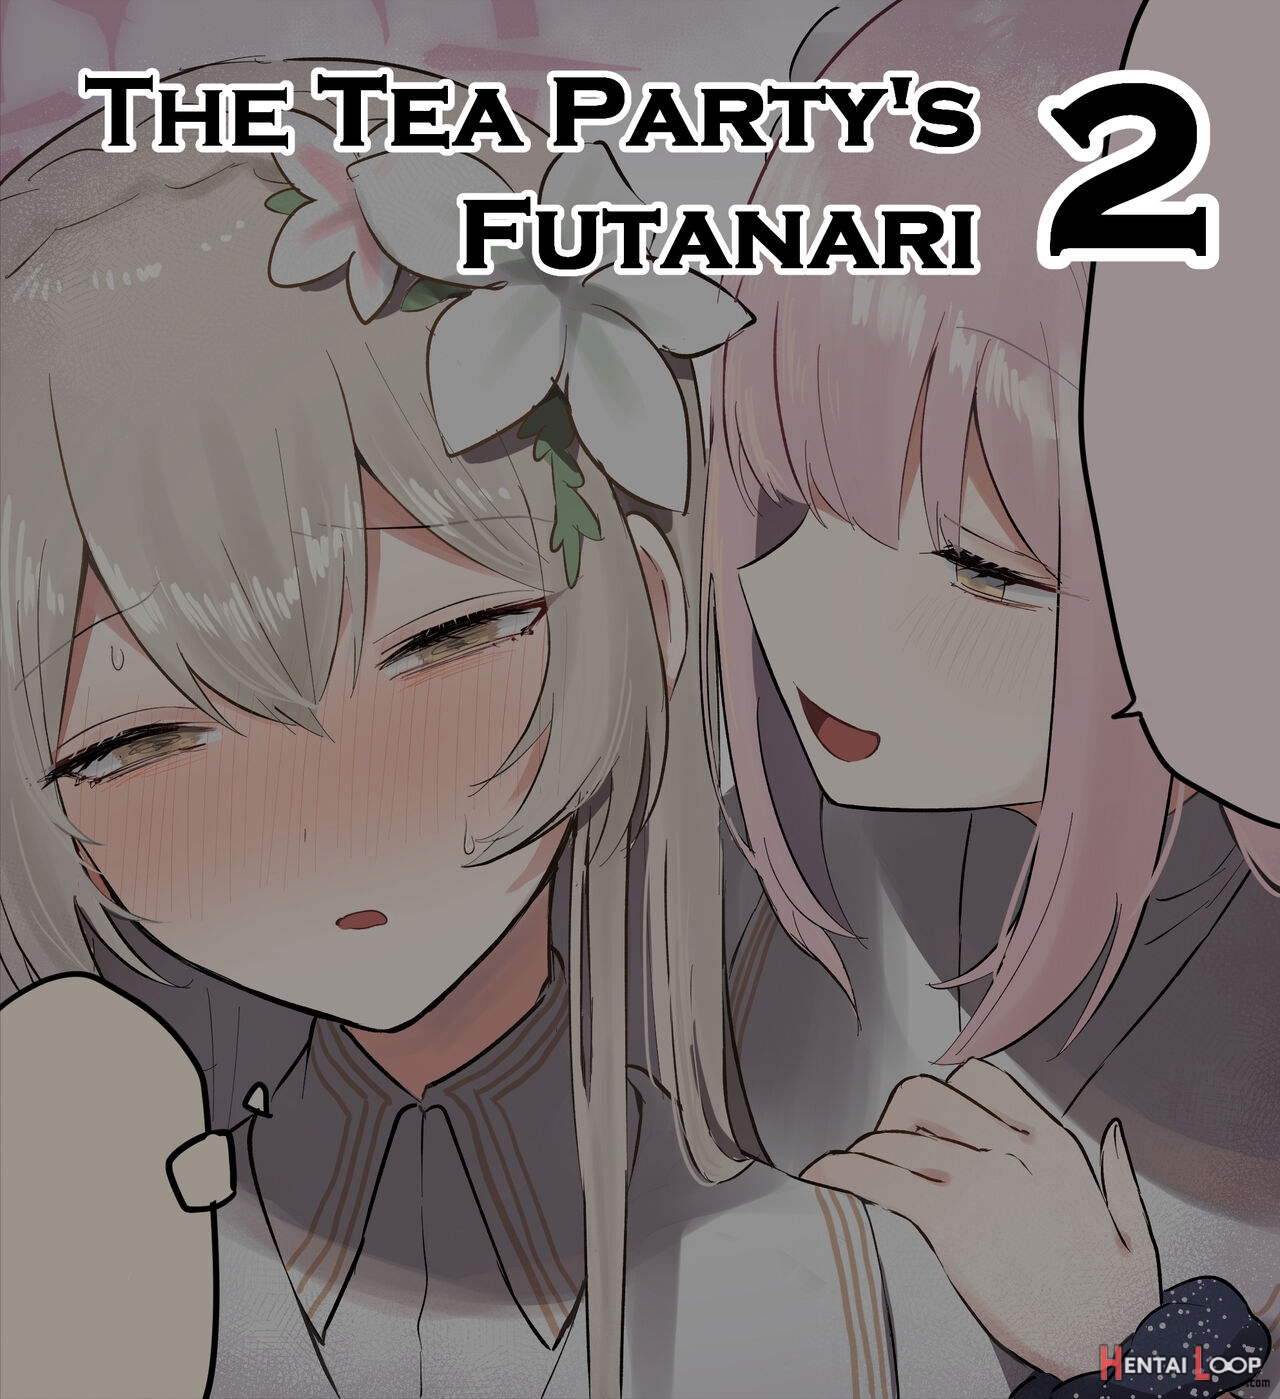 The Tea Party's Futanari #2 page 1